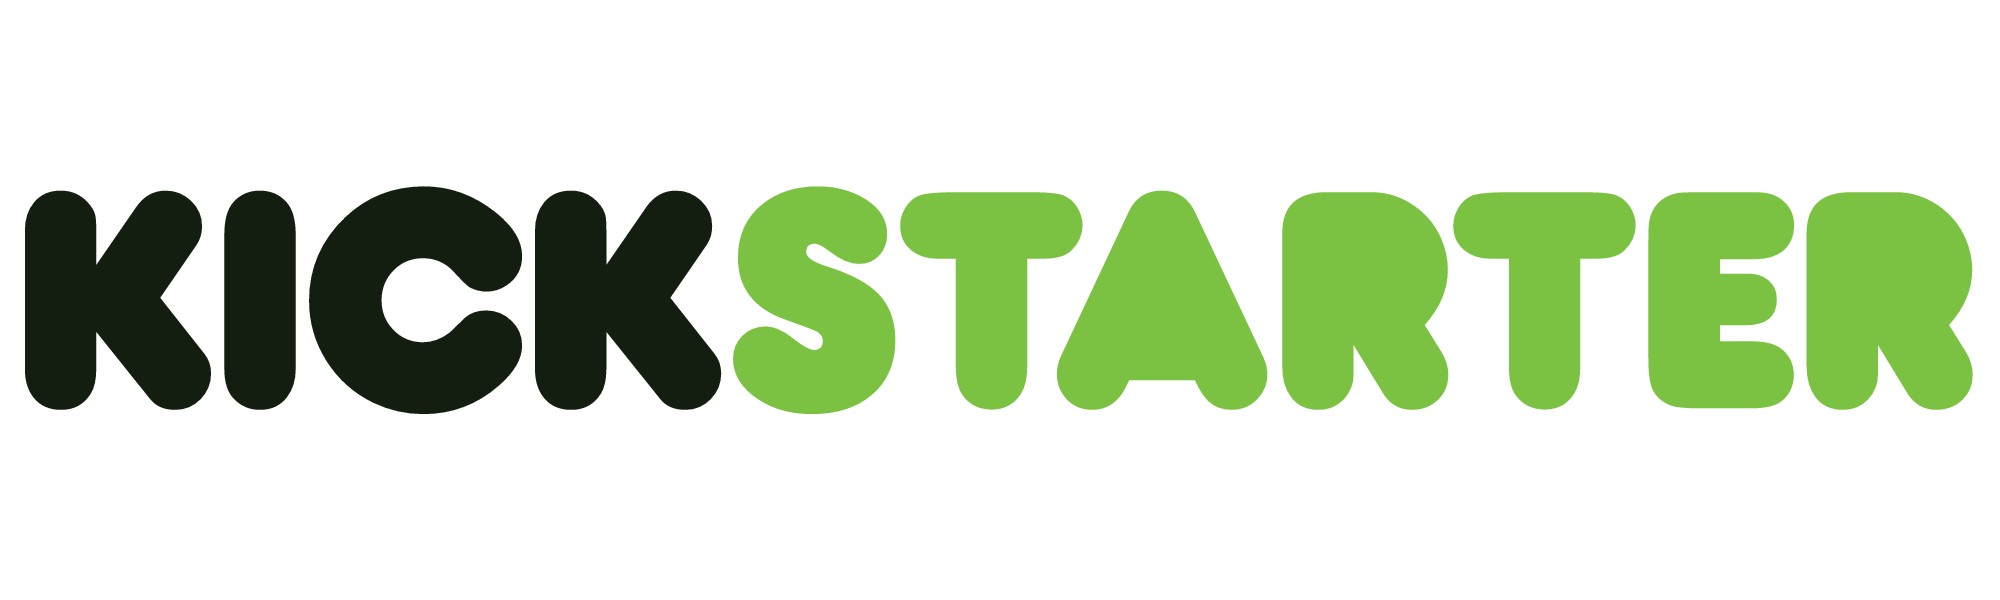 kickstarter-logo-whitebg.jpg